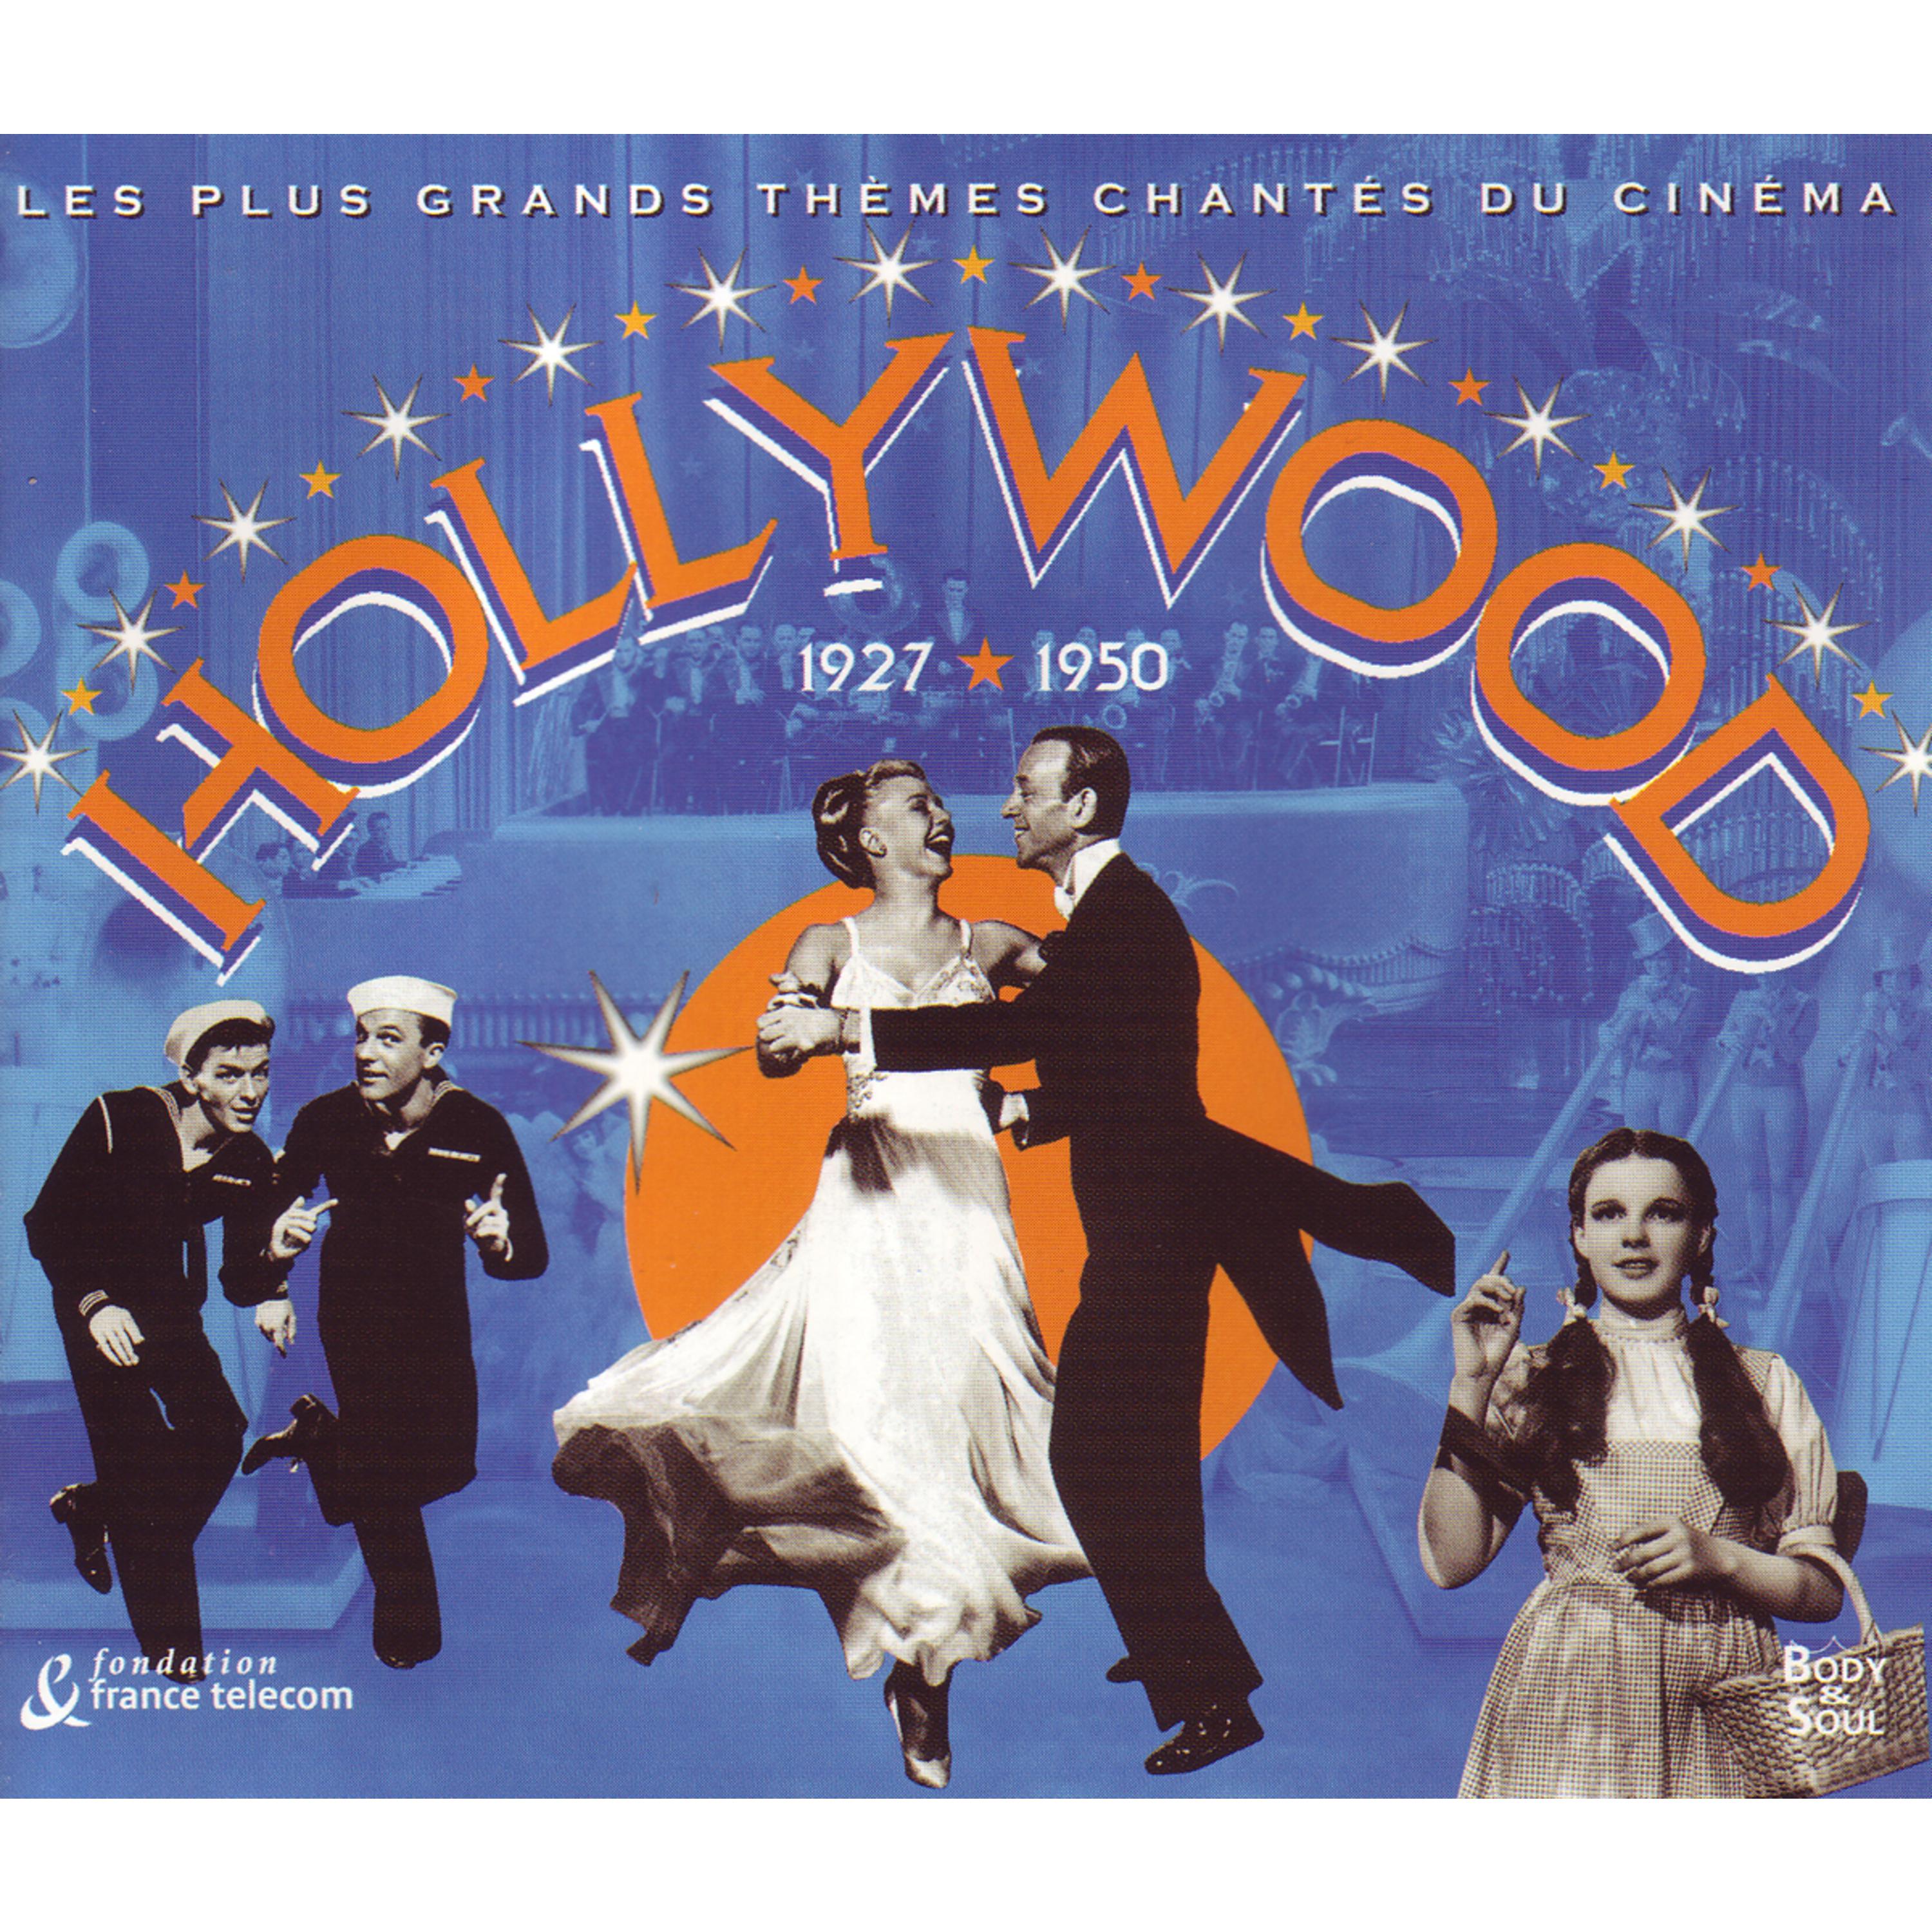 Hollywood 19271950  Le Plus Grand The mes Chante s Du Cine ma